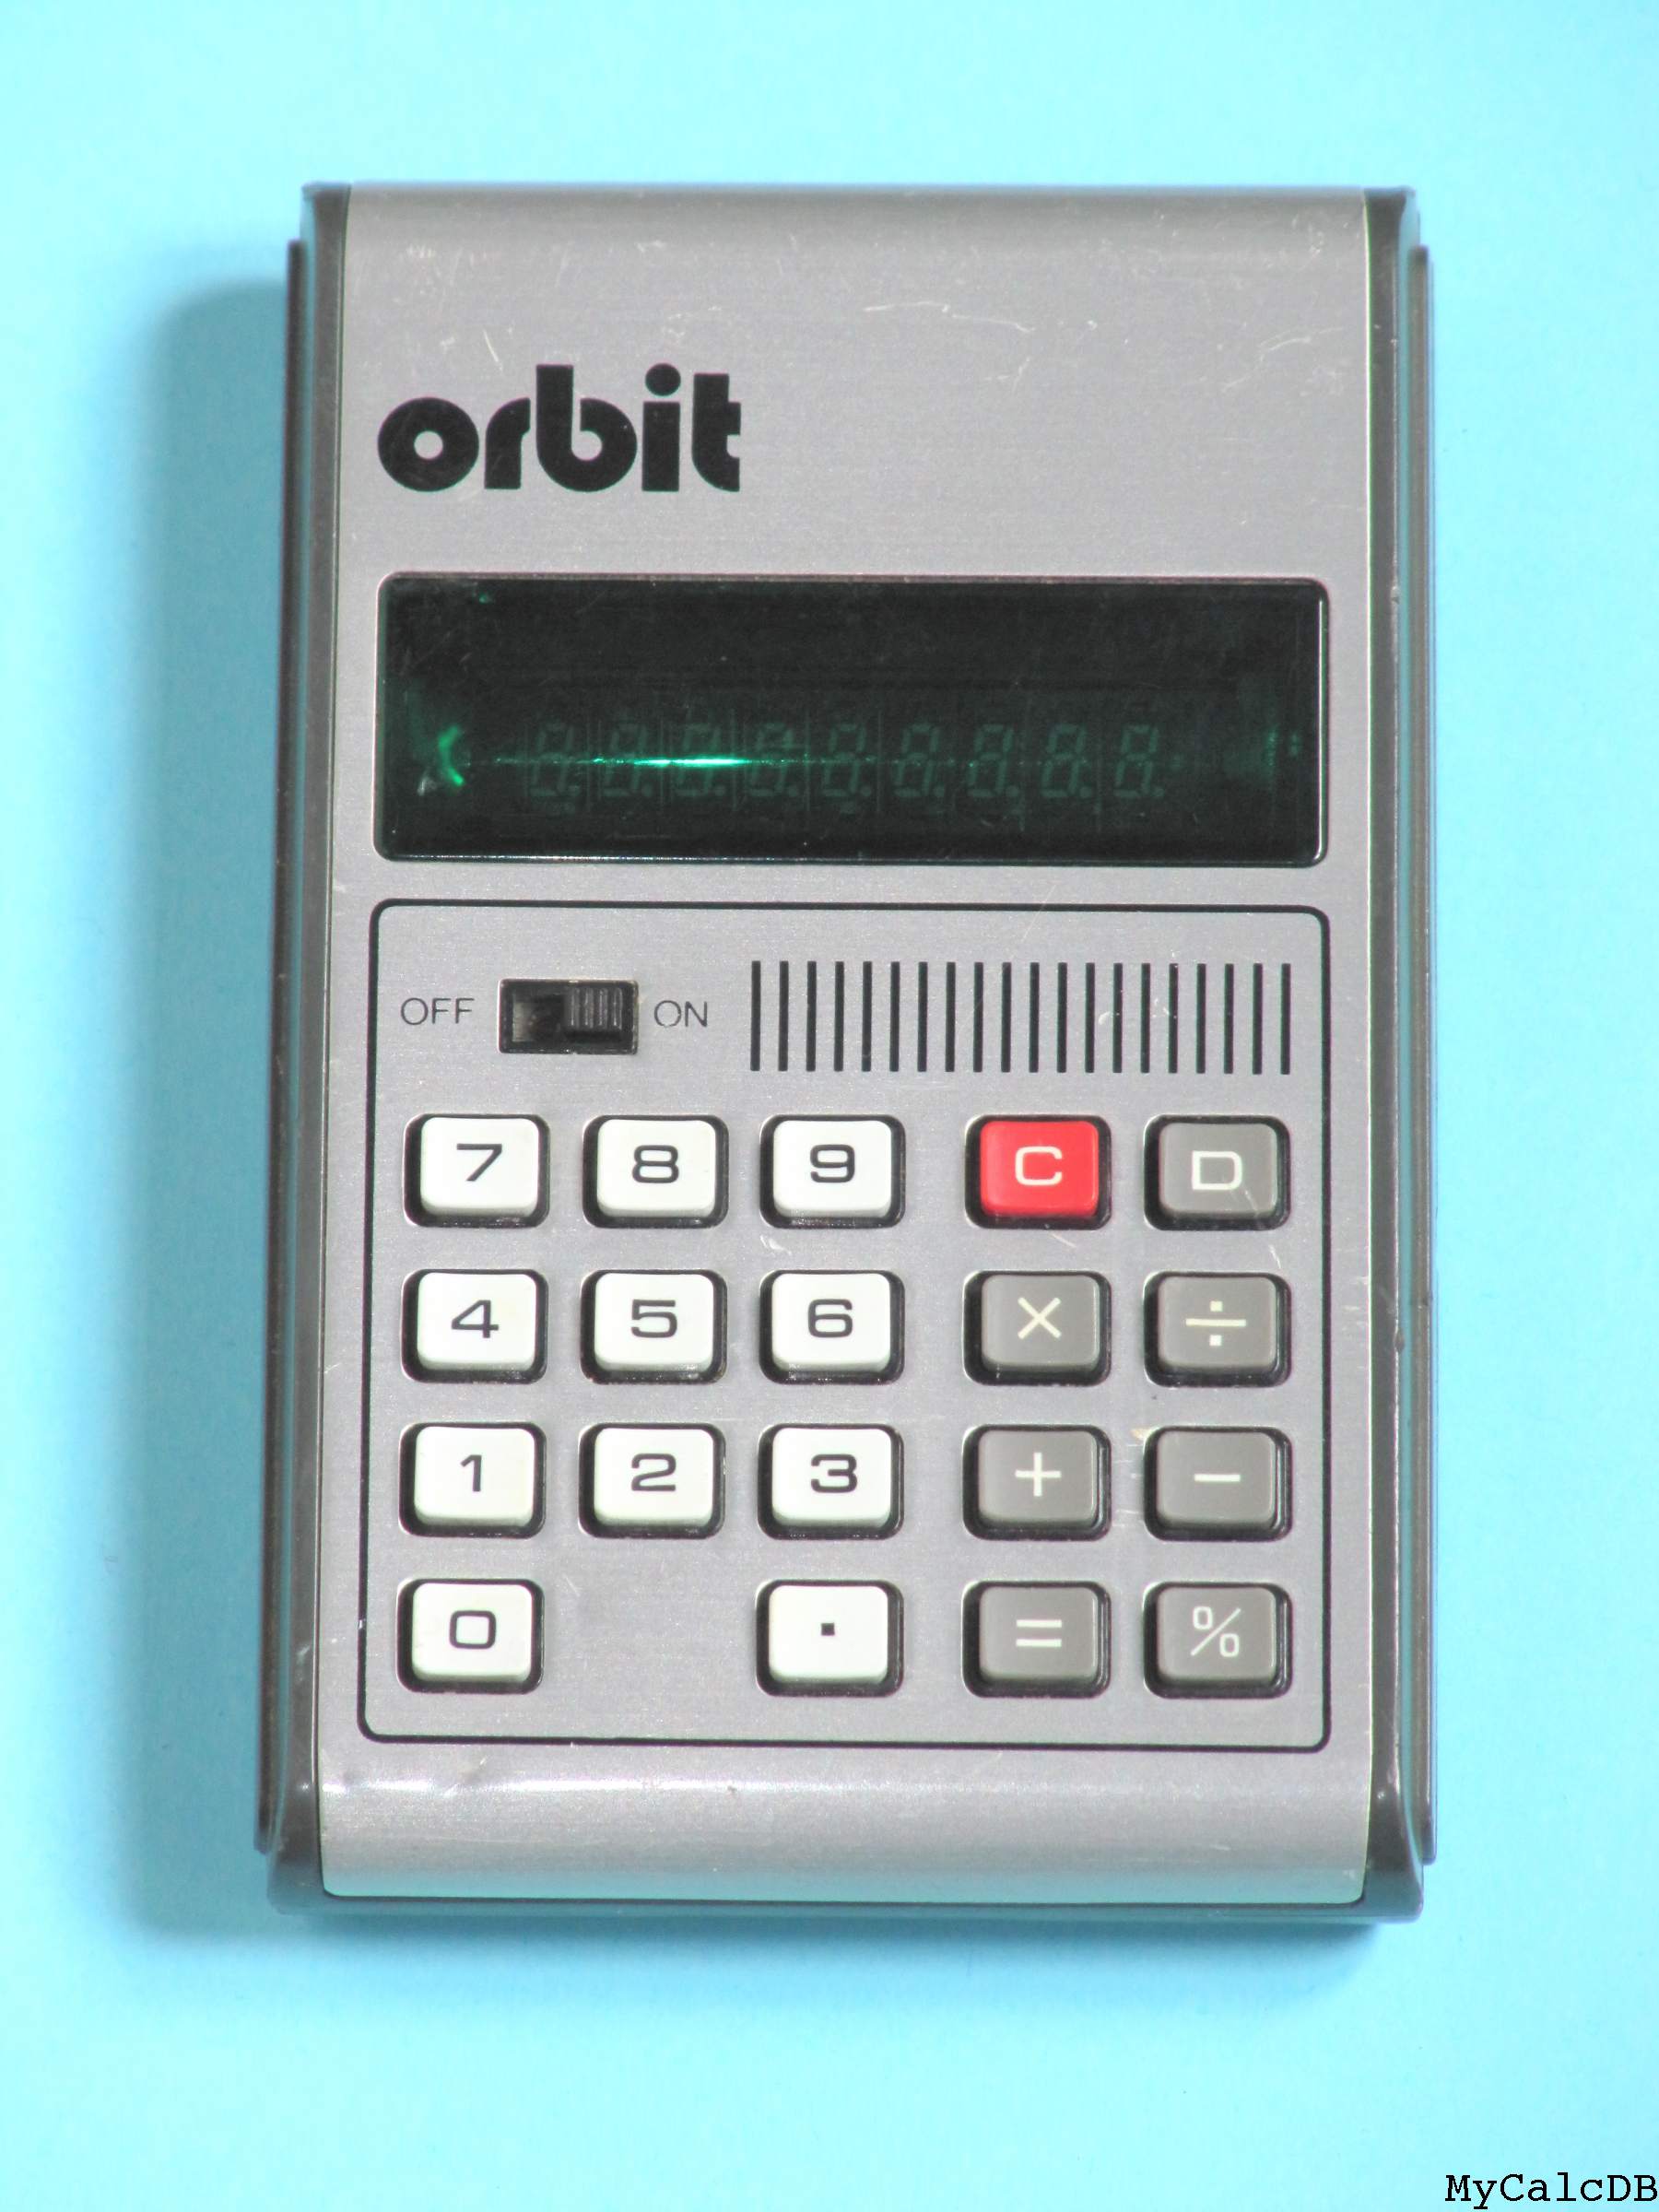 Orbit OH1001